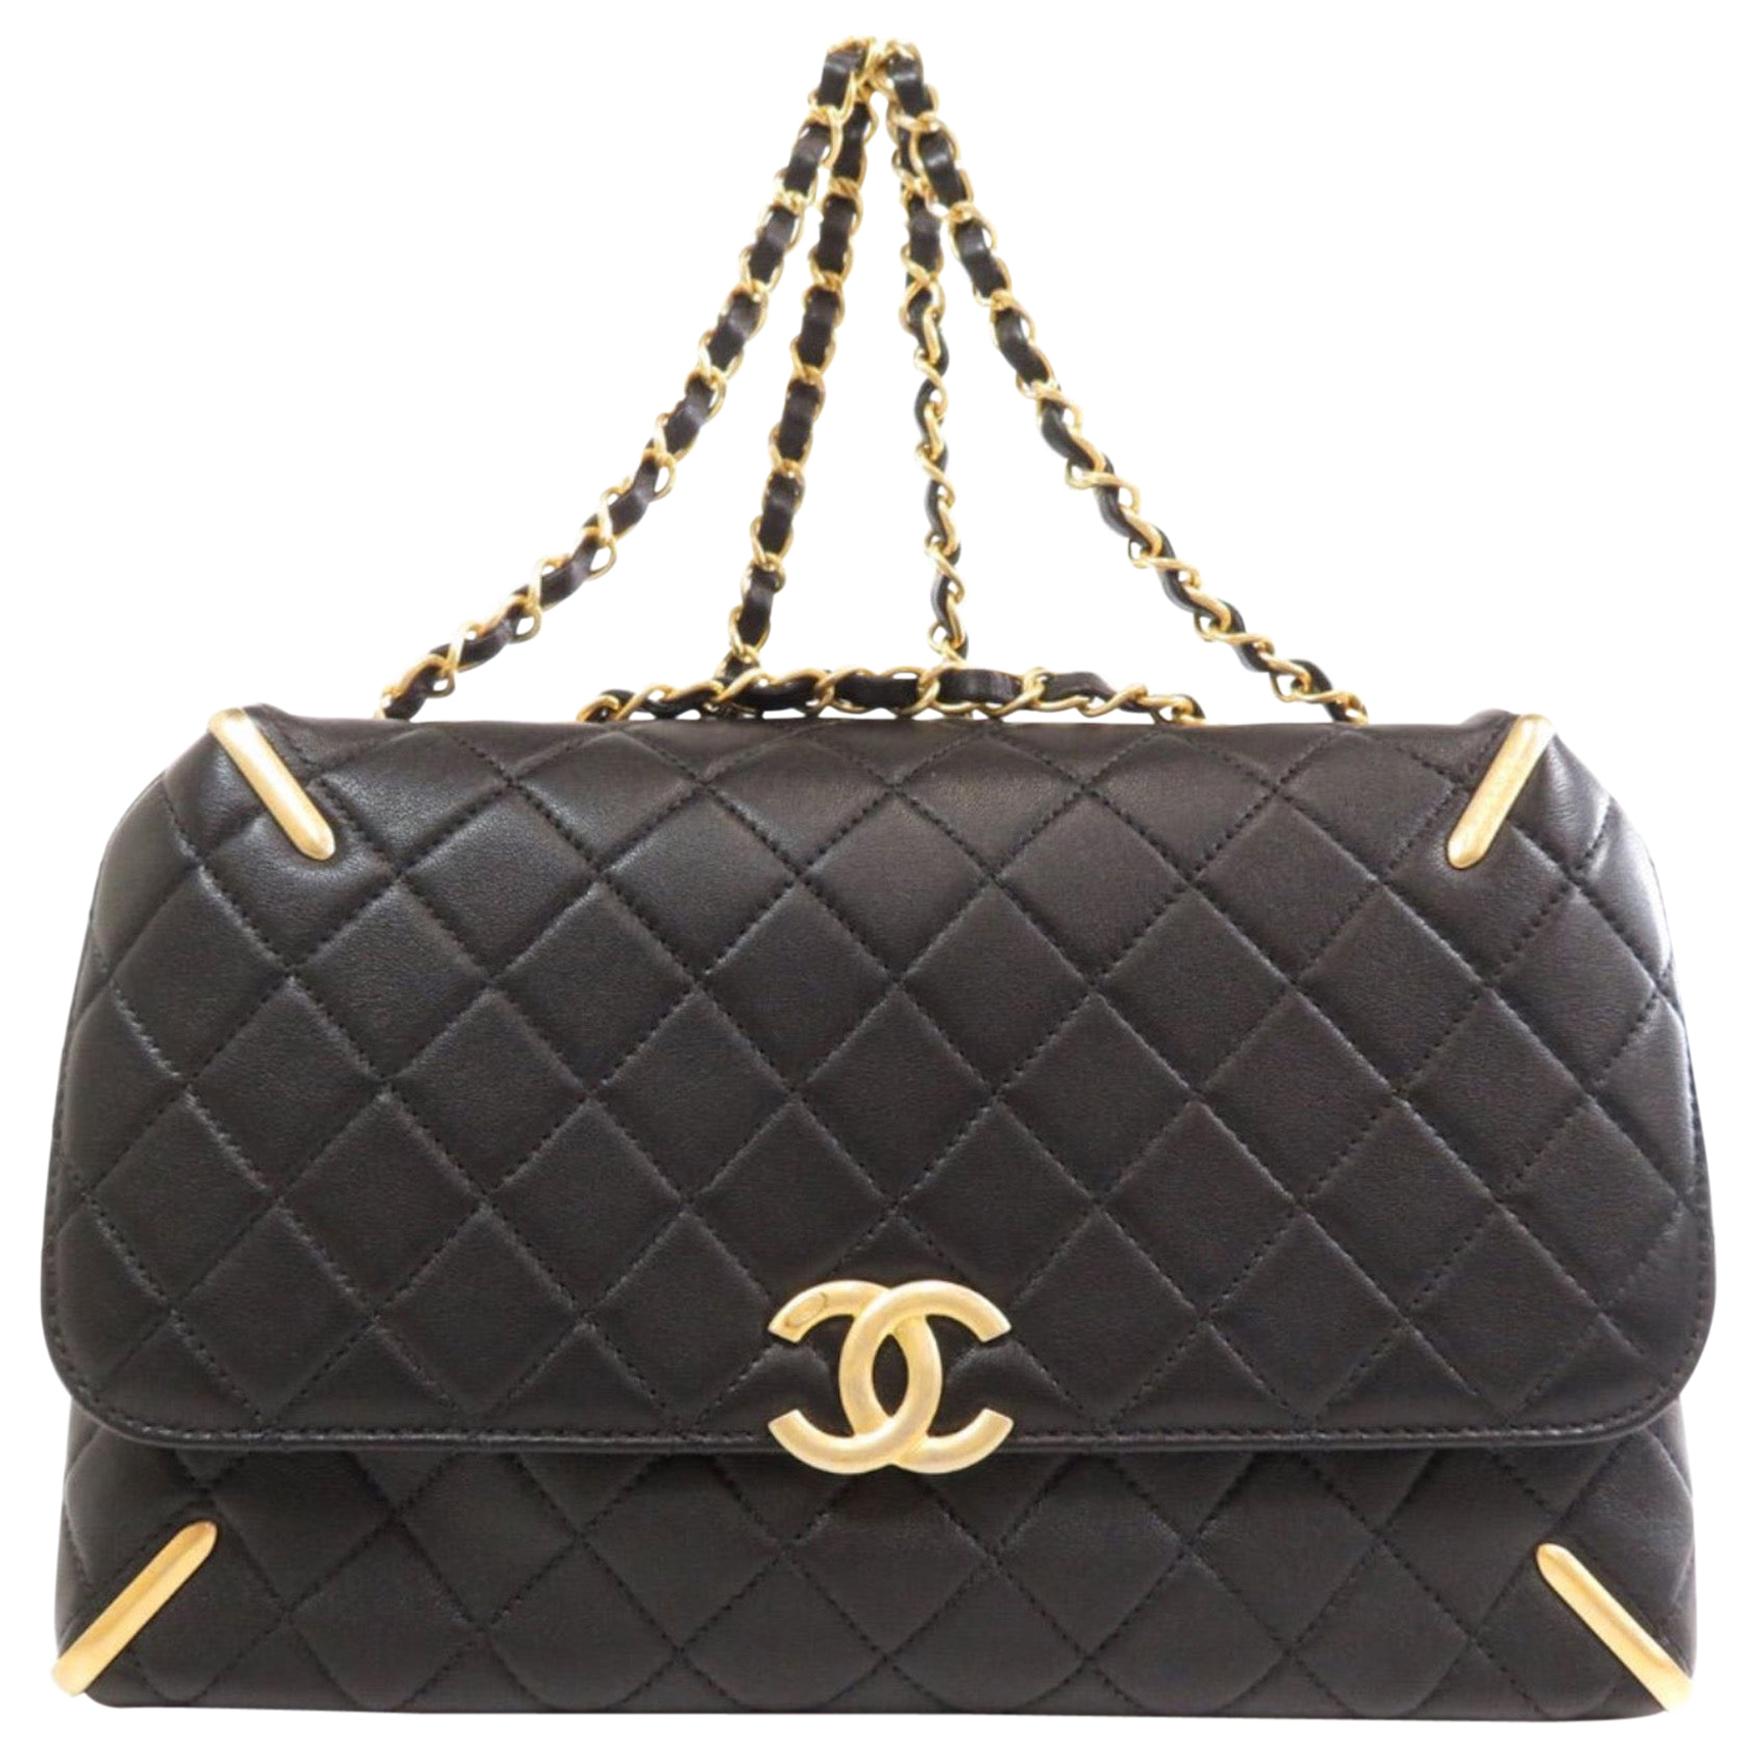 Chanel Black Leather Quilted Gold Evening Tote Carryall Shoulder Flap Bag